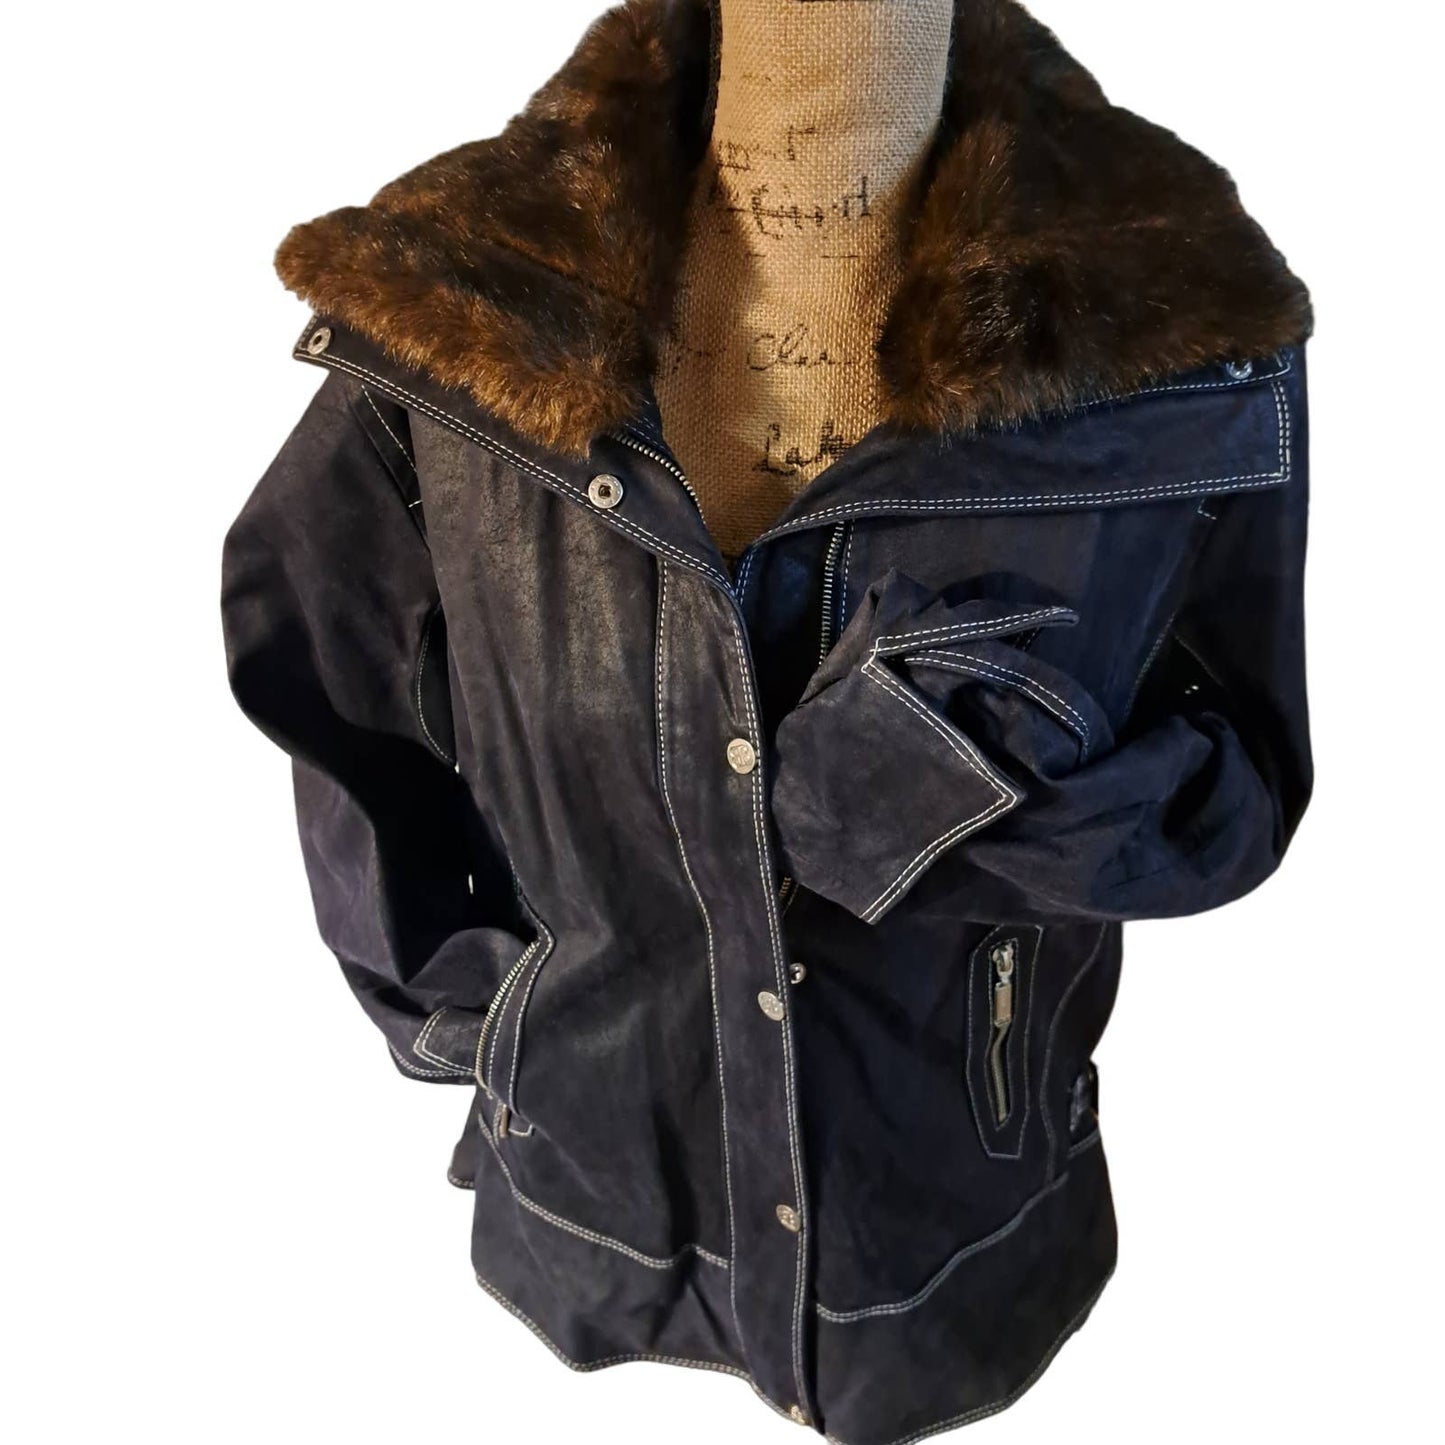 NWT-Bradley Bayou Lined INDIGO BLUE SUEDE Jacket Fur Collar & Liner Large